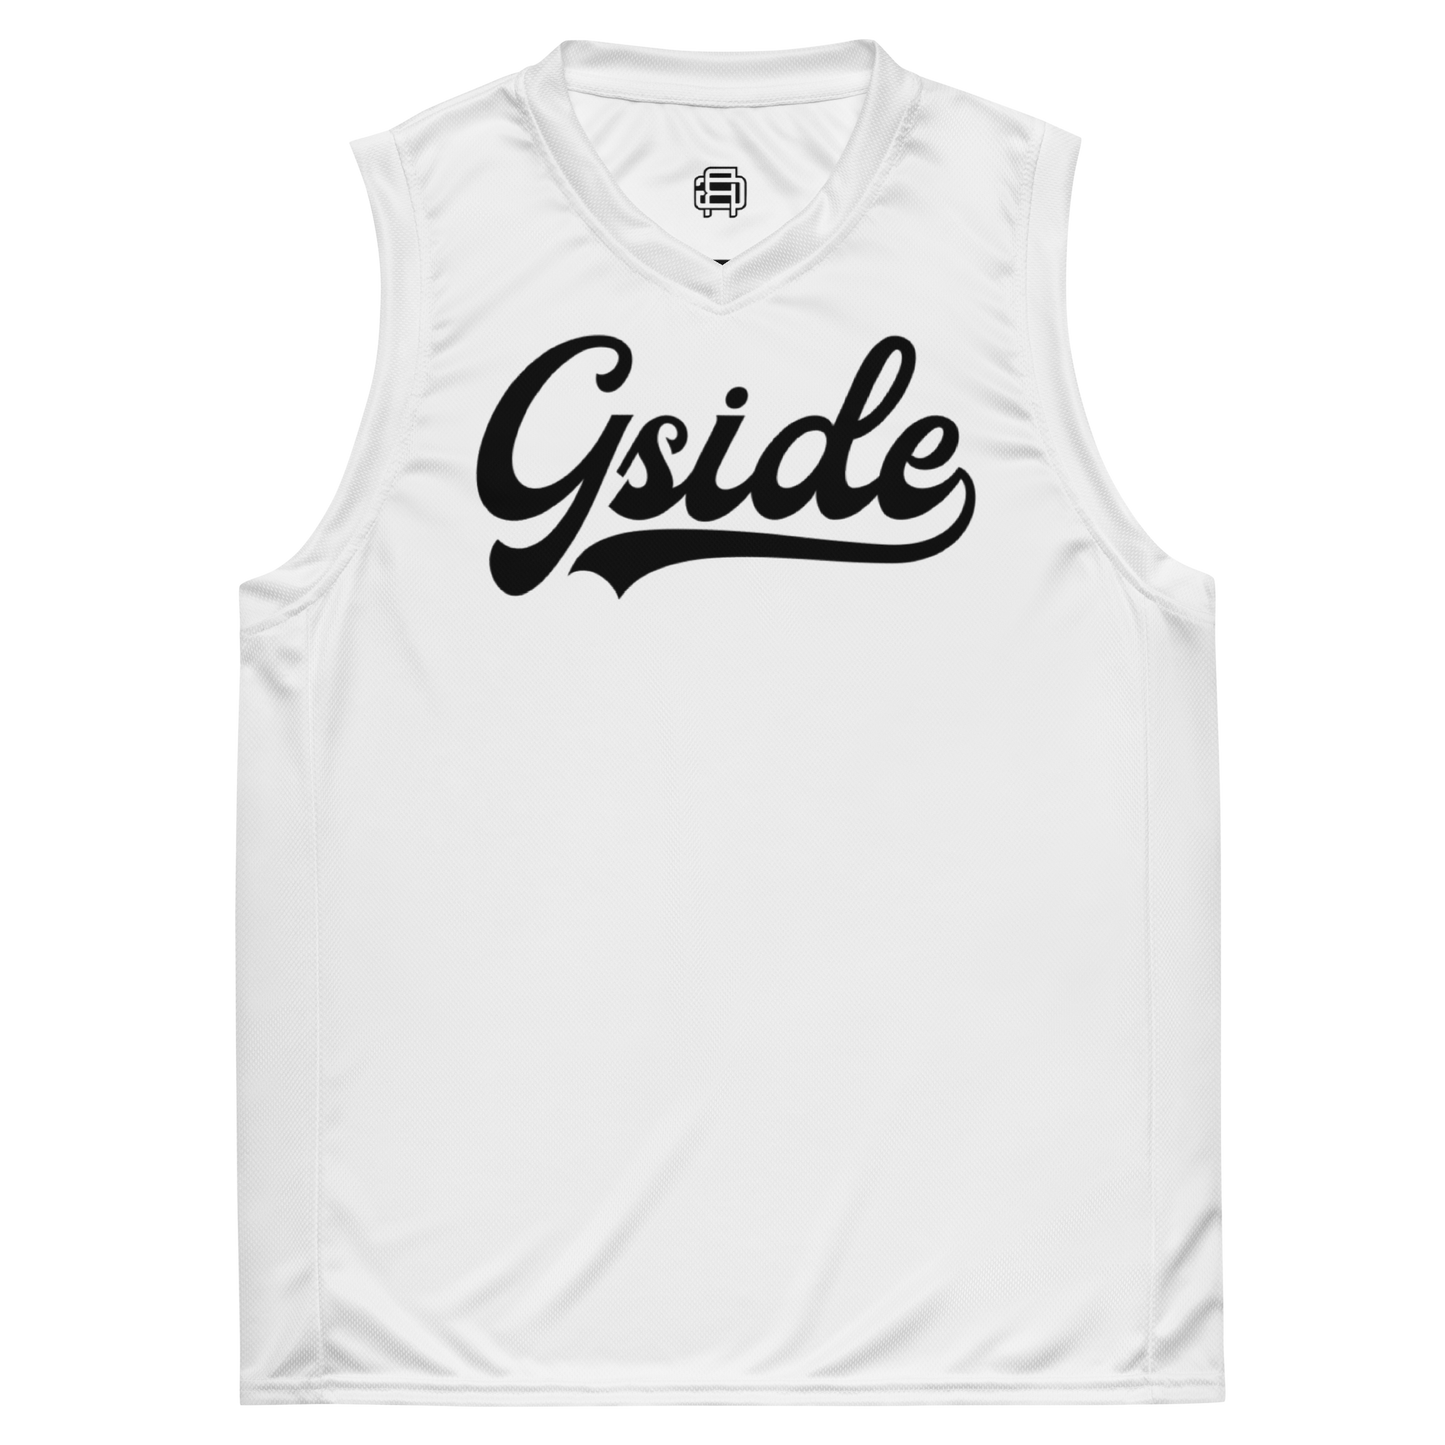 Gside Basketball Jersey - Cocain White